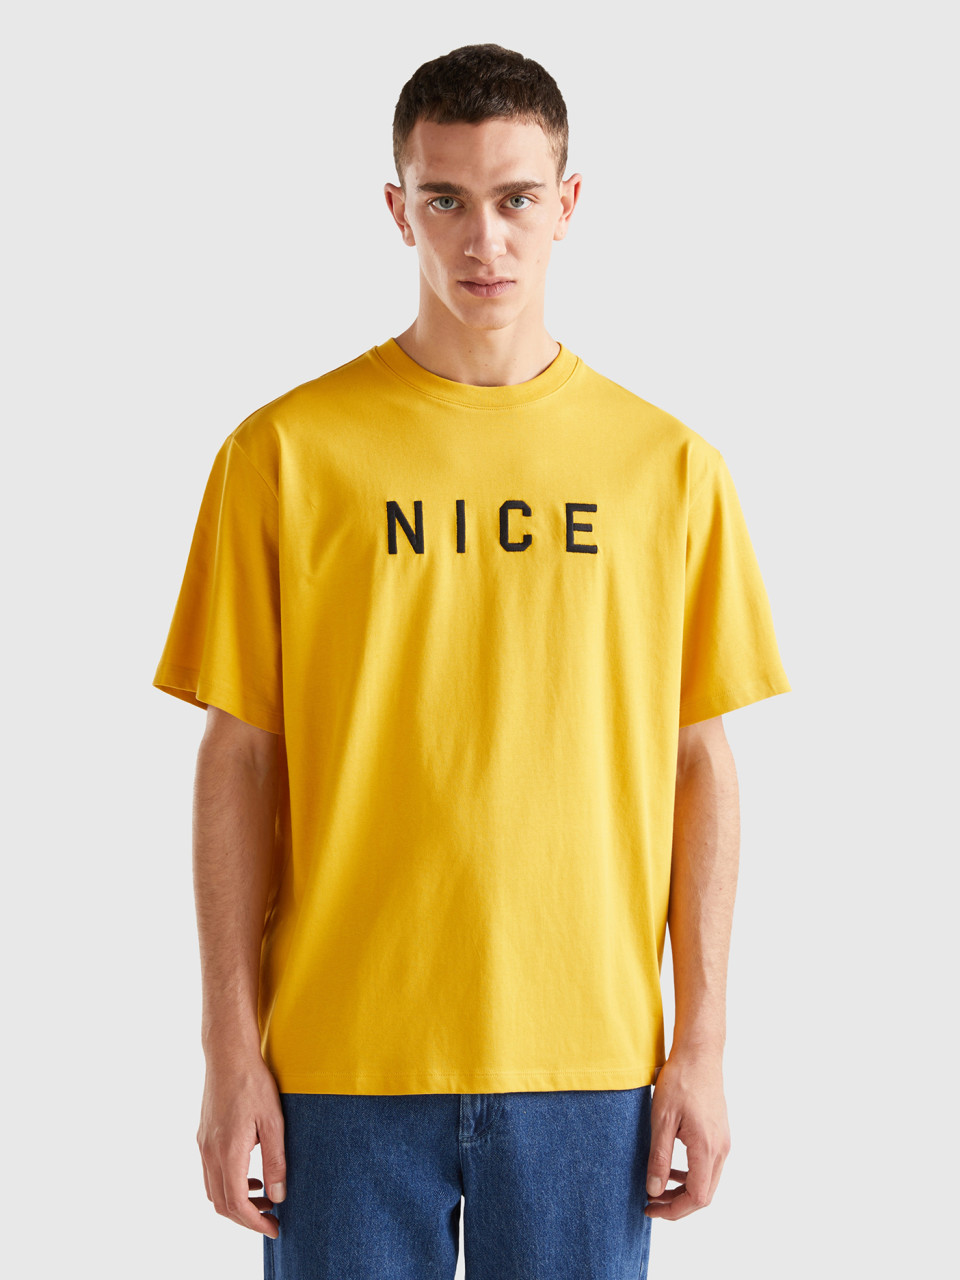 Benetton, T-shirt With Slogan Print, Yellow, Men